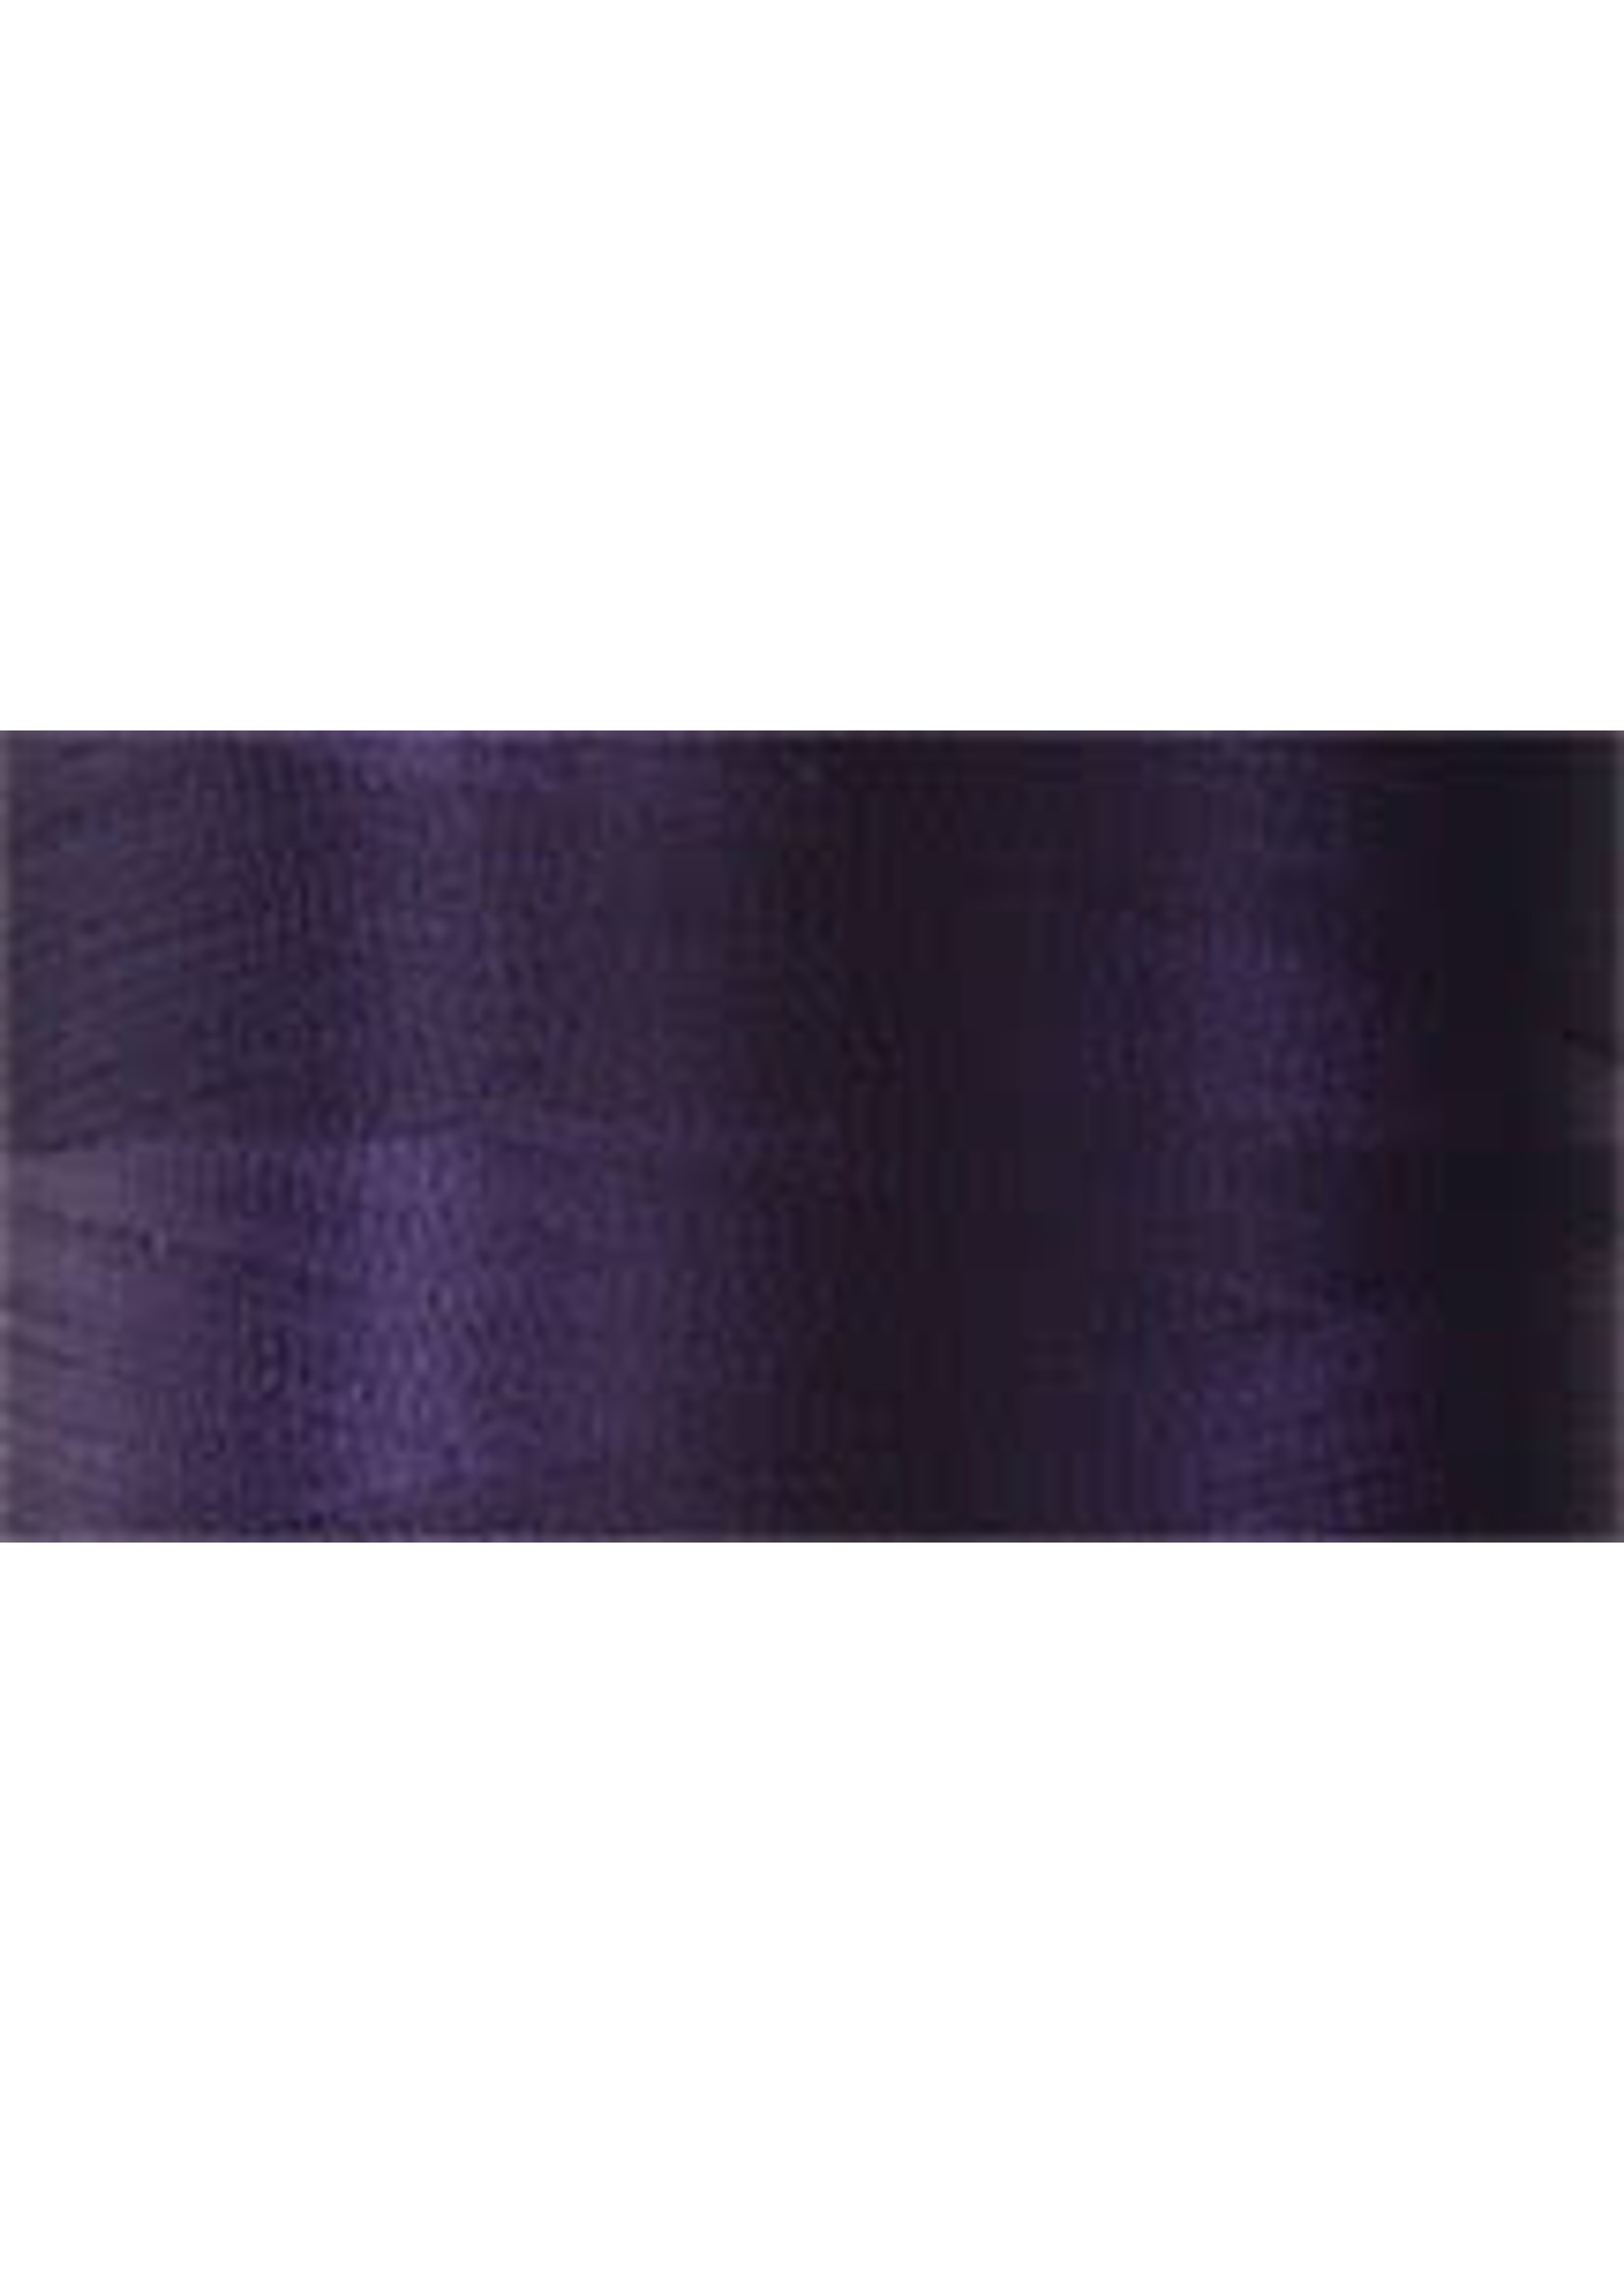 Superior Threads Bottom Line - #60 - 1300 m - 631 Deep Purple